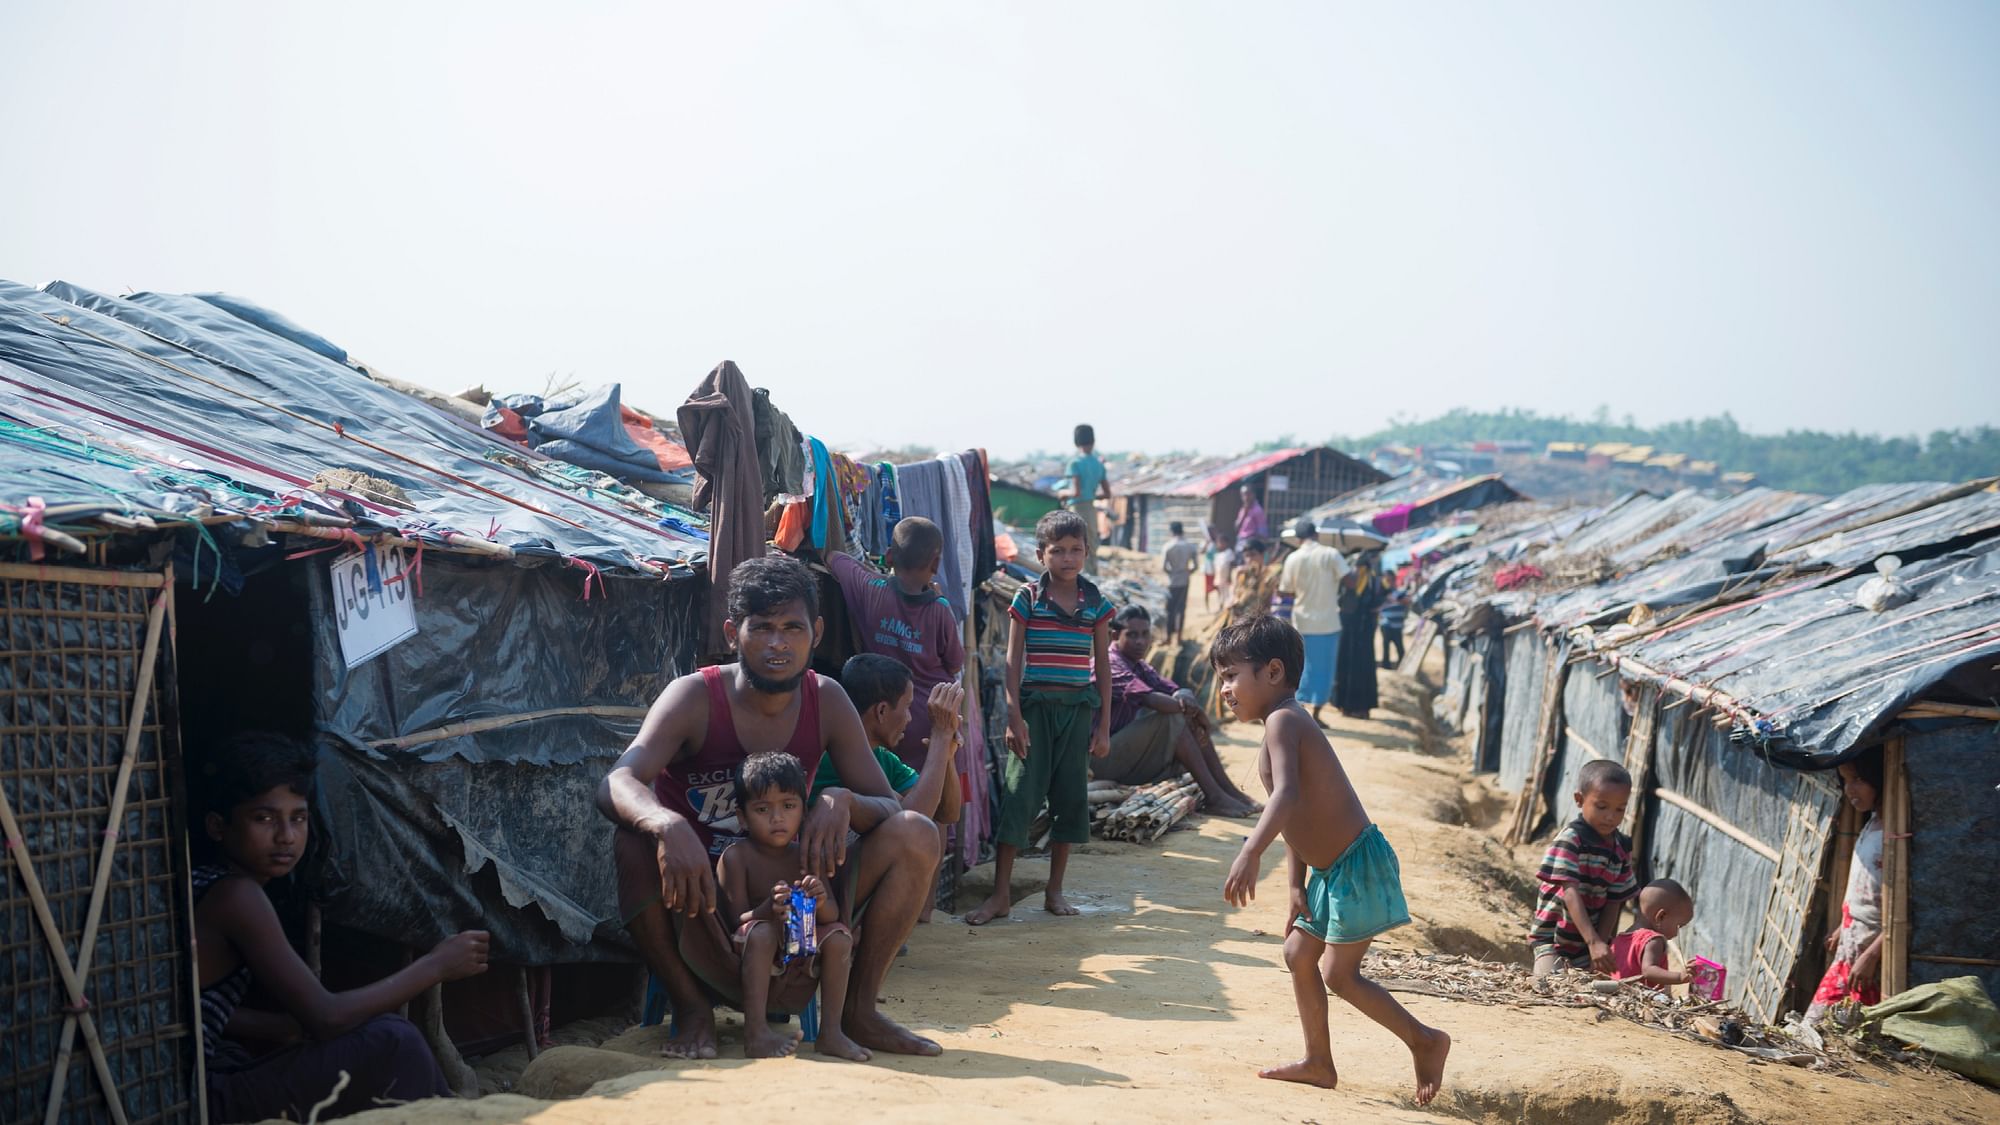 <div class="paragraphs"><p>A Rohingya refugee camp in Cox's Bazaar, Bangladesh.&nbsp;</p></div>